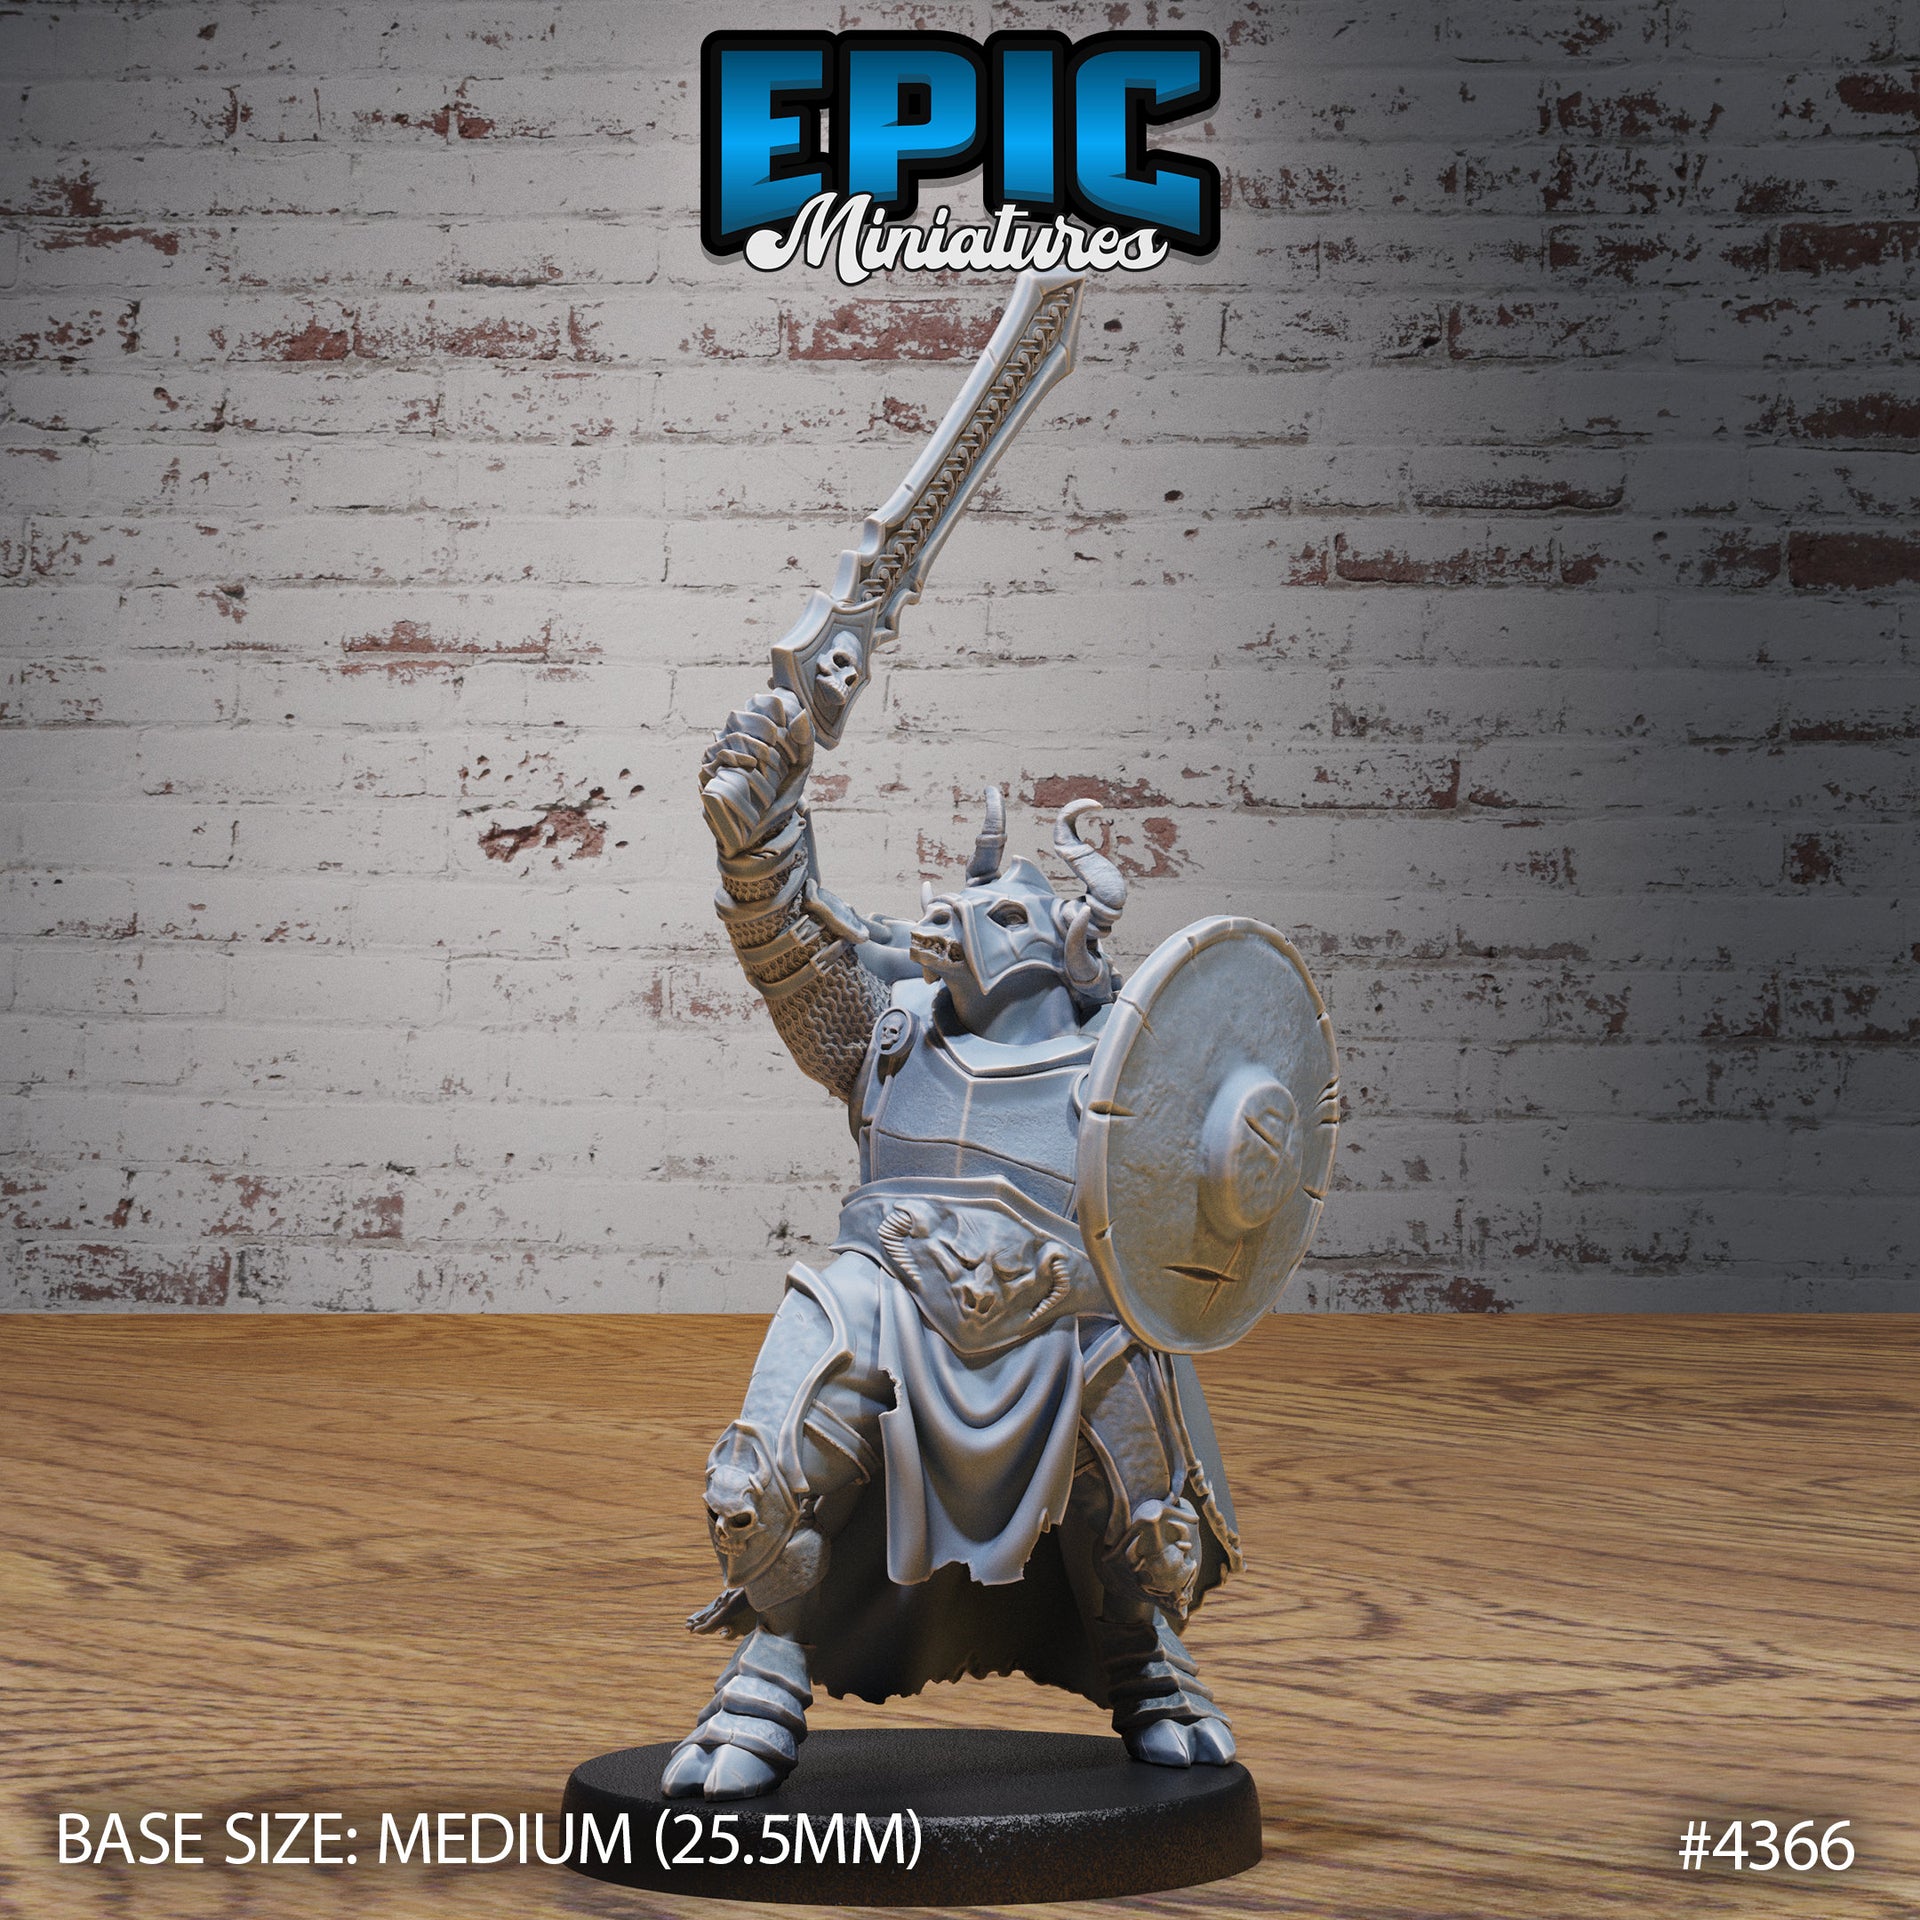 Minotaur Paladin - Epic Miniatures | Olympian Legends | 28mm | 32mm | Greek | Fighter | Knight | Chaos